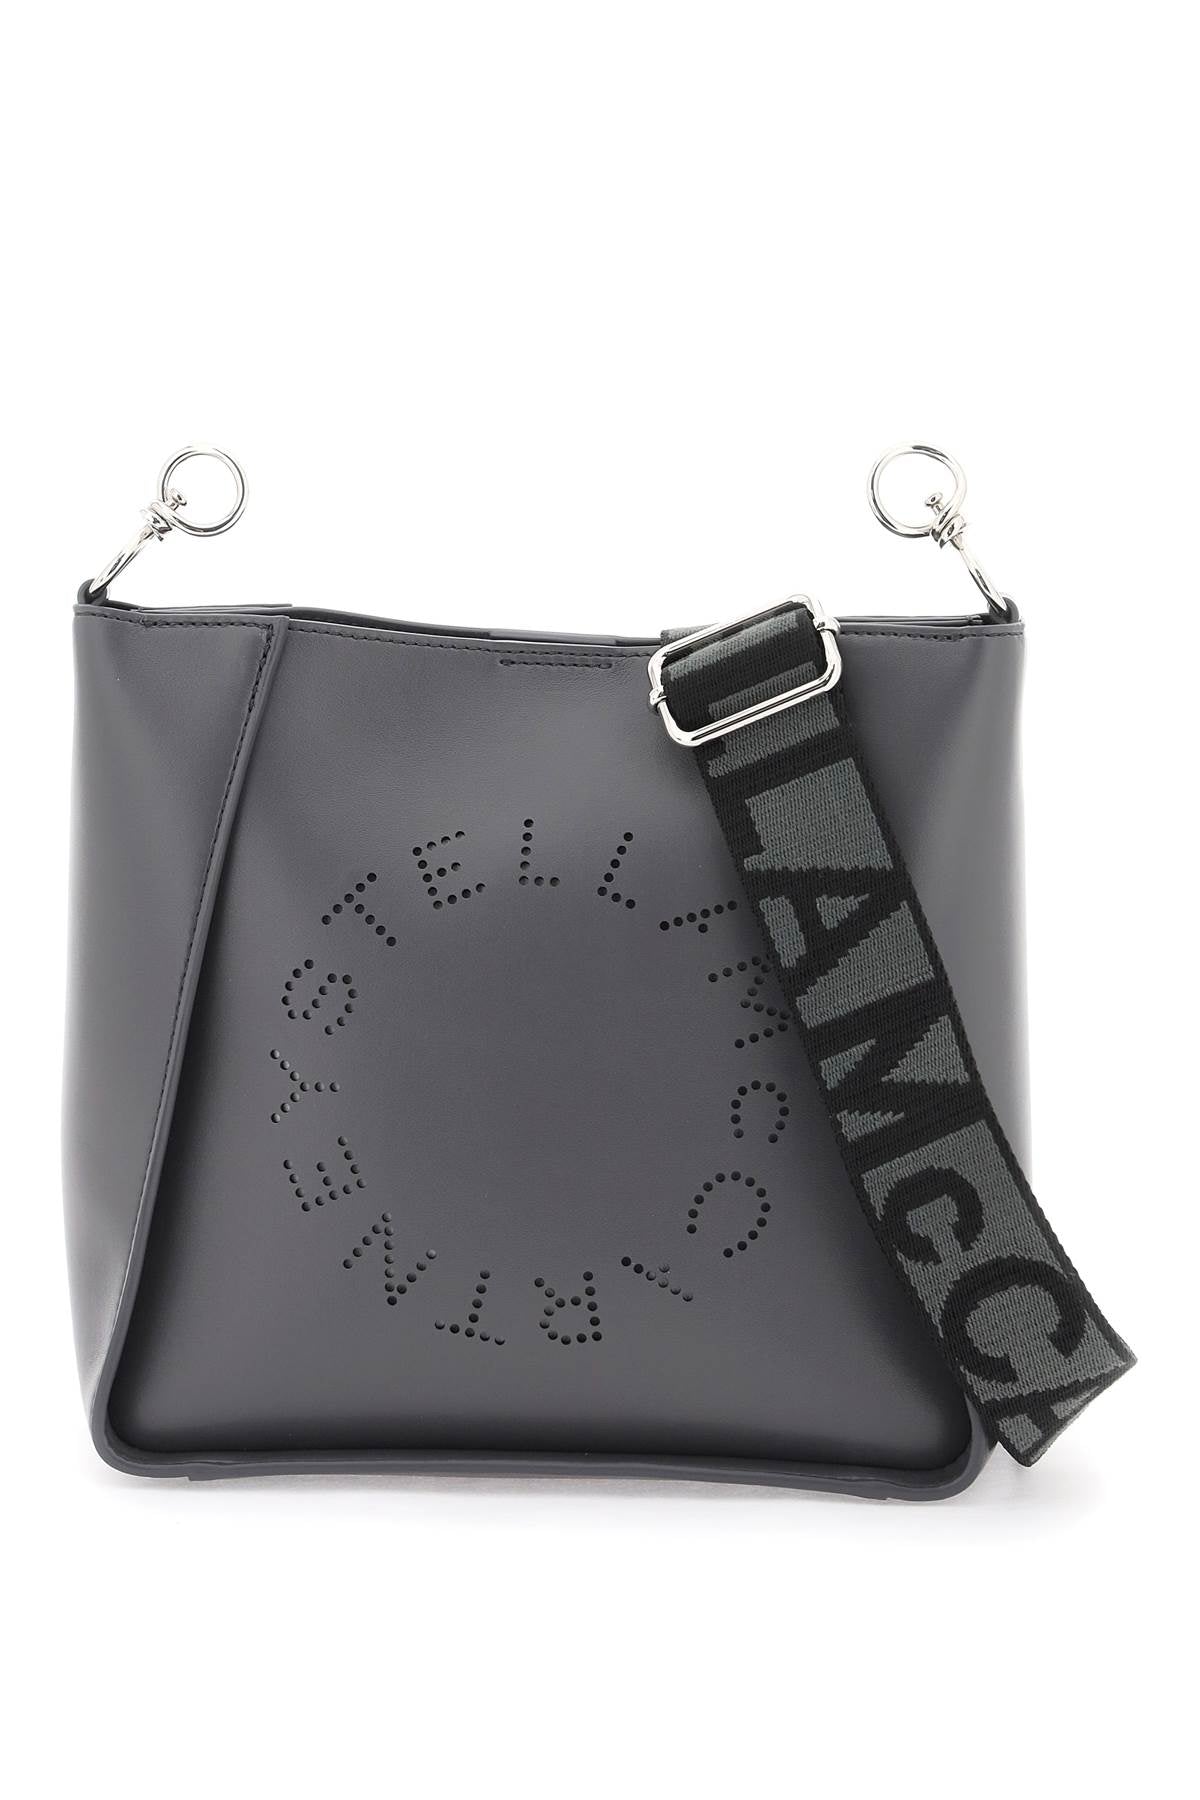 Stella mccartney crossbody bag with perforated stella logo-0